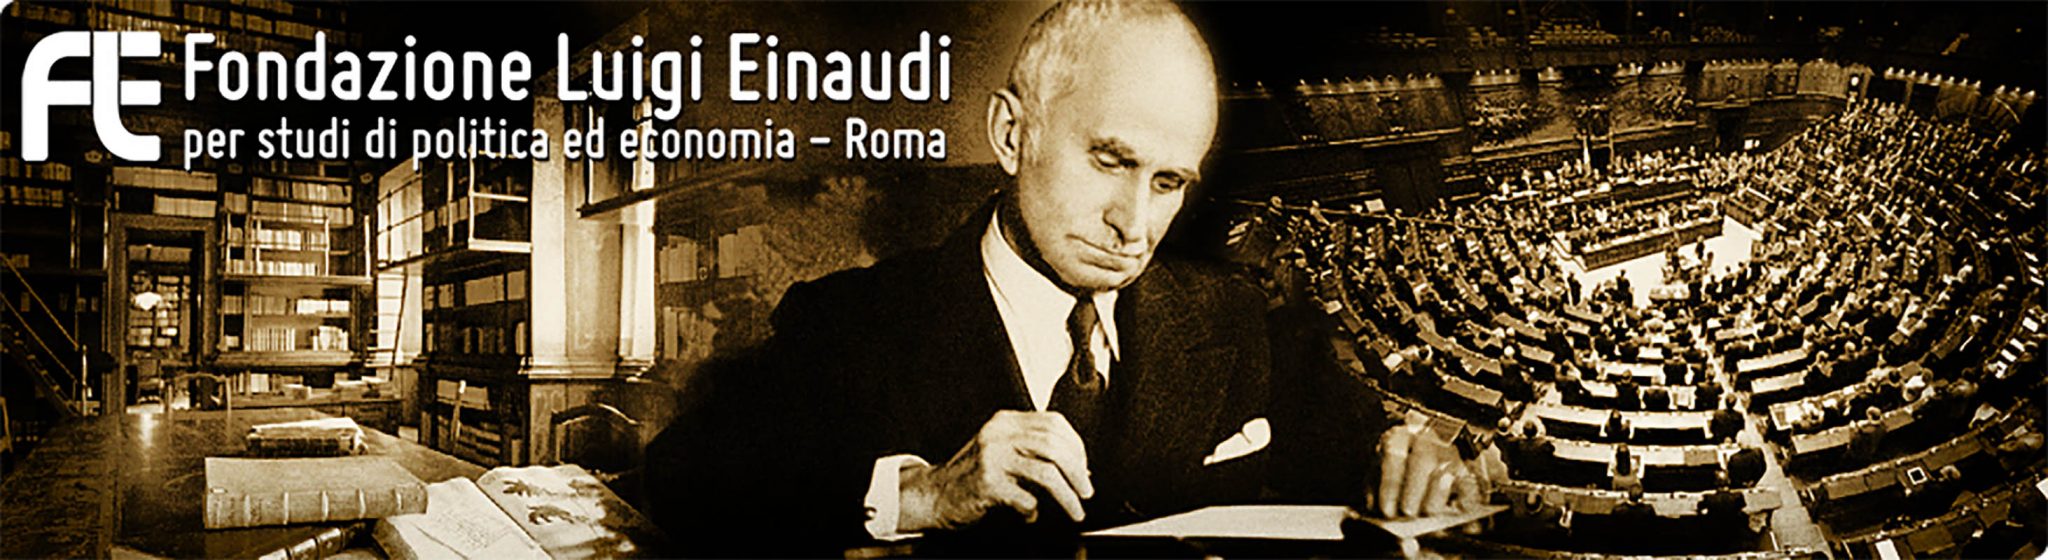 fondazione Einaudi